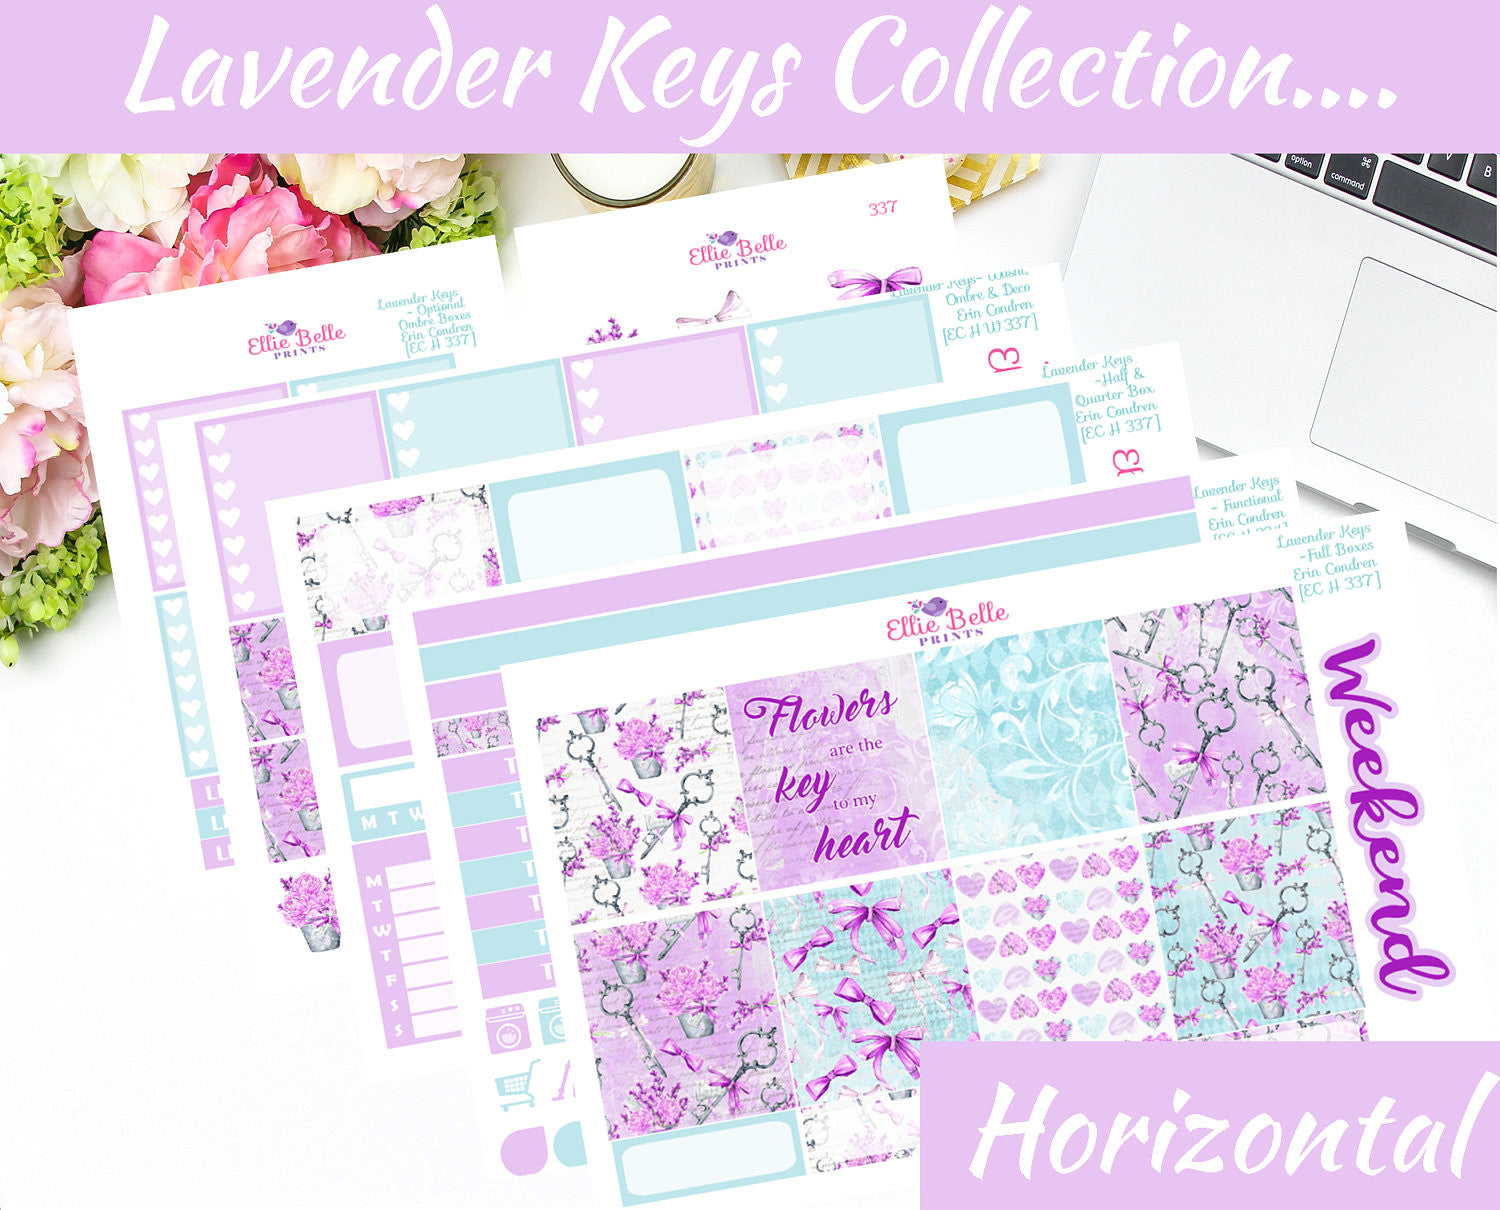 LAVENDER KEYS COLLECTION - Horizontal Weekly Planner Kit [337]